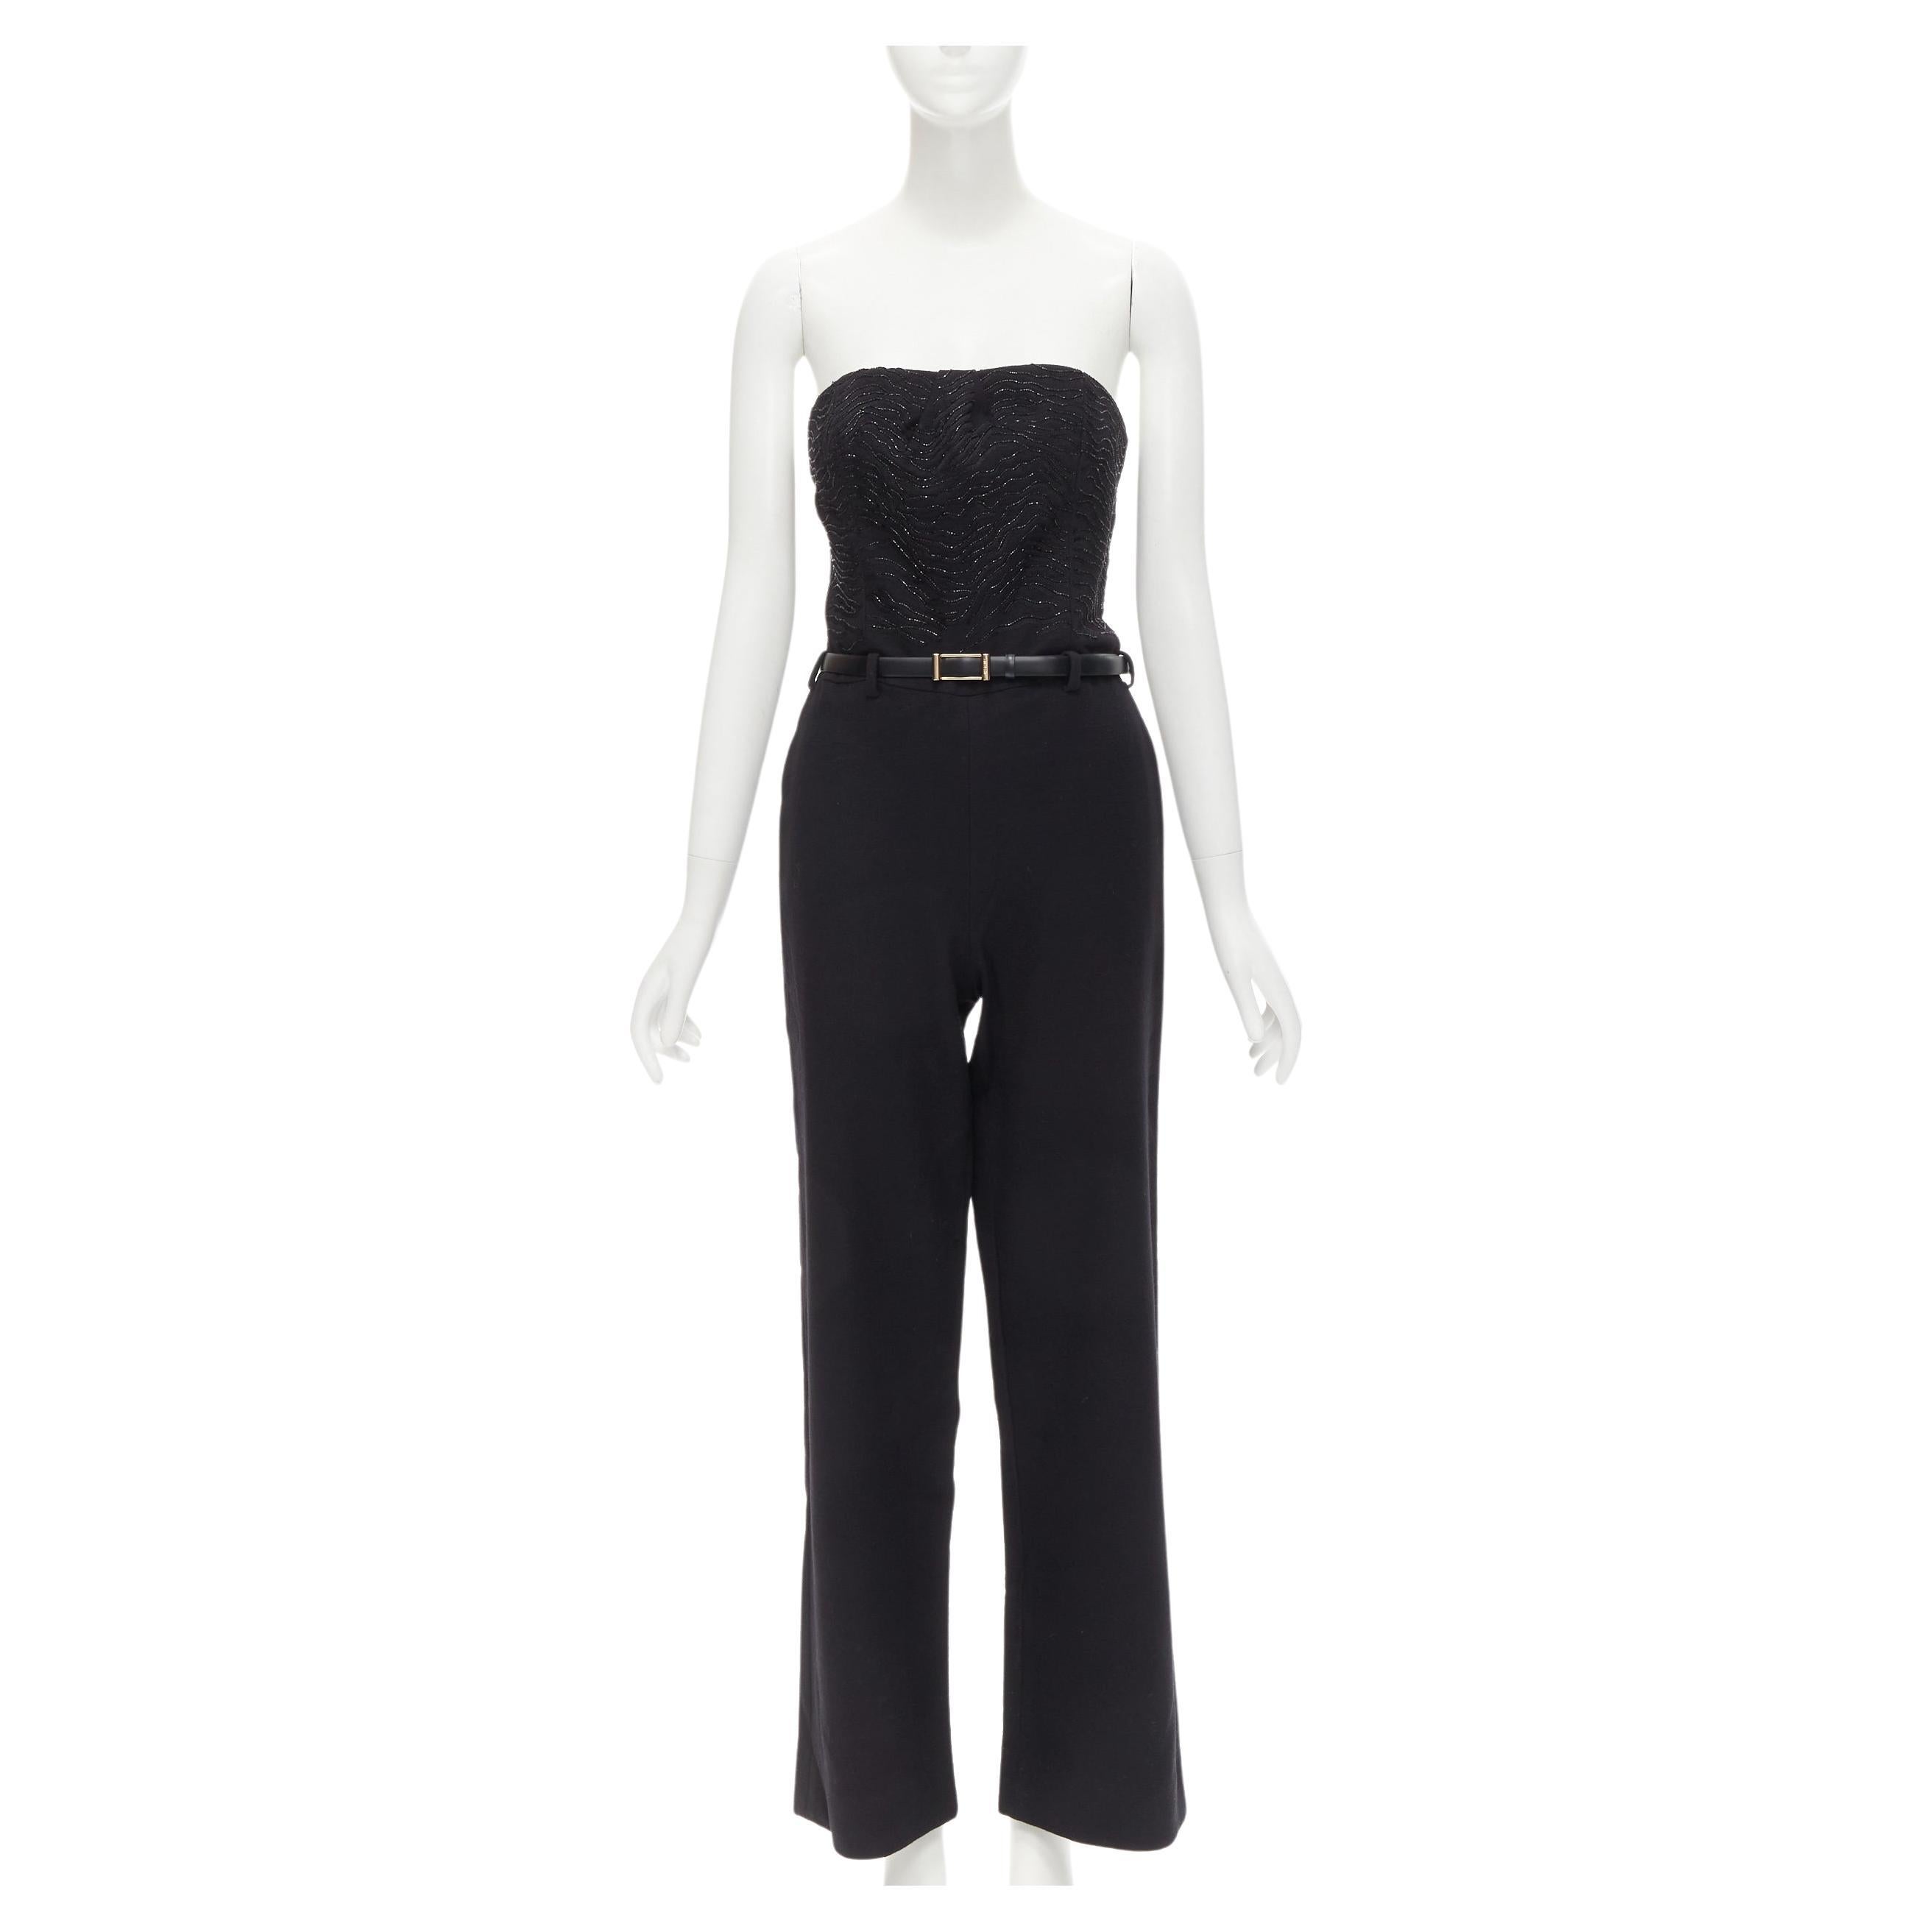 JASON WU 2014 Runway black bead embellished boned corset belted jumpsuit US2 XS For Sale